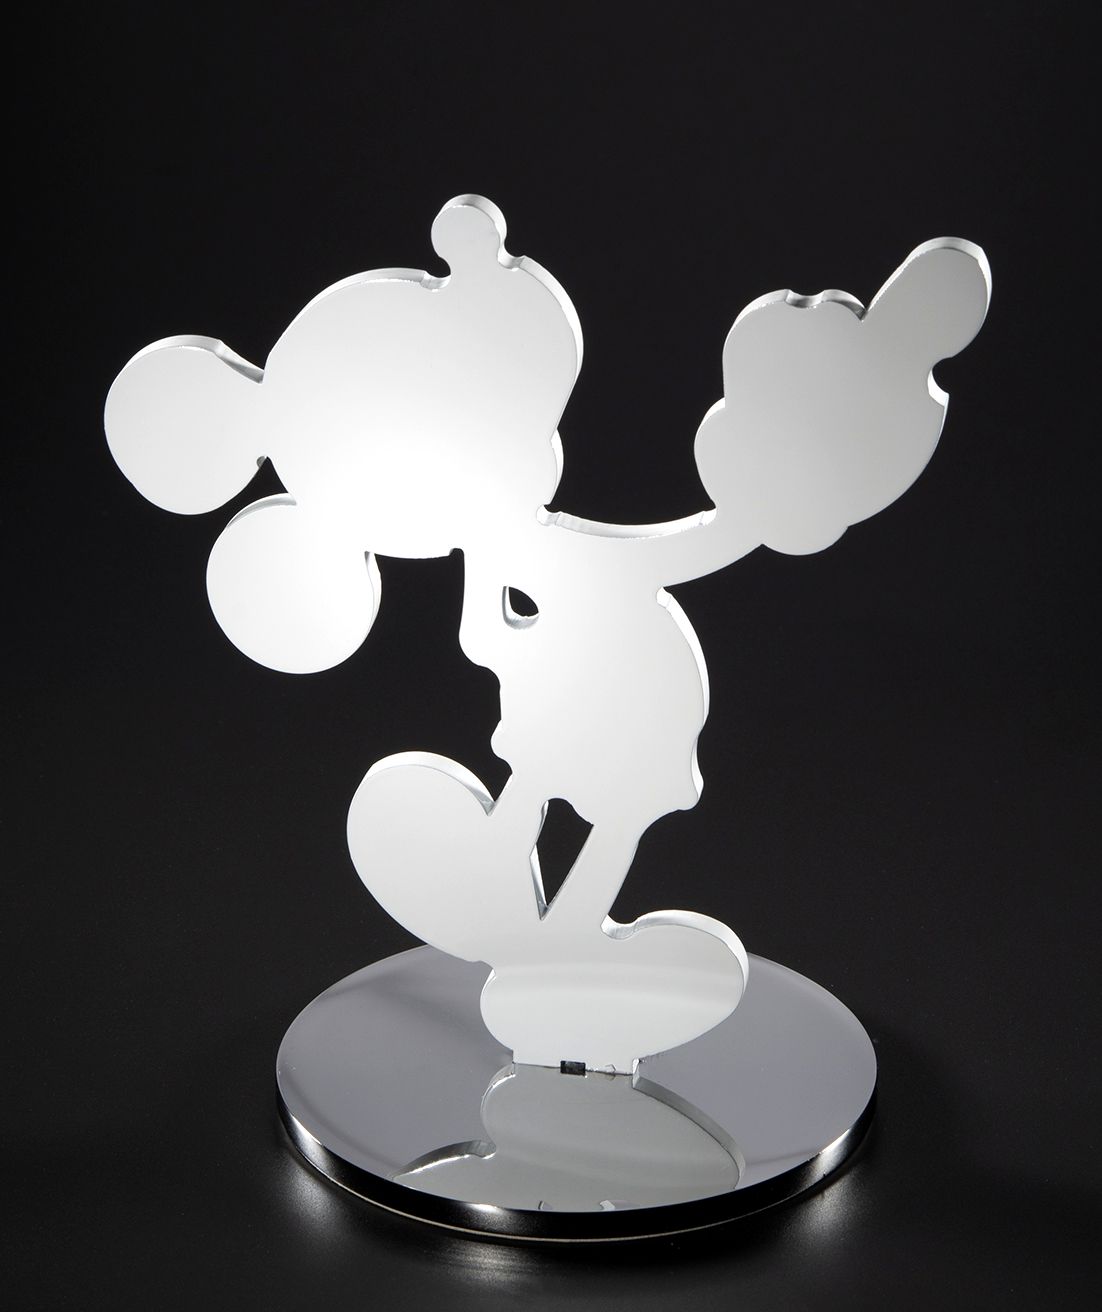 Thierry Corpet Thierry CORPET by Poulpik Studio

Mouse Finger White

Sculpture e&hellip;